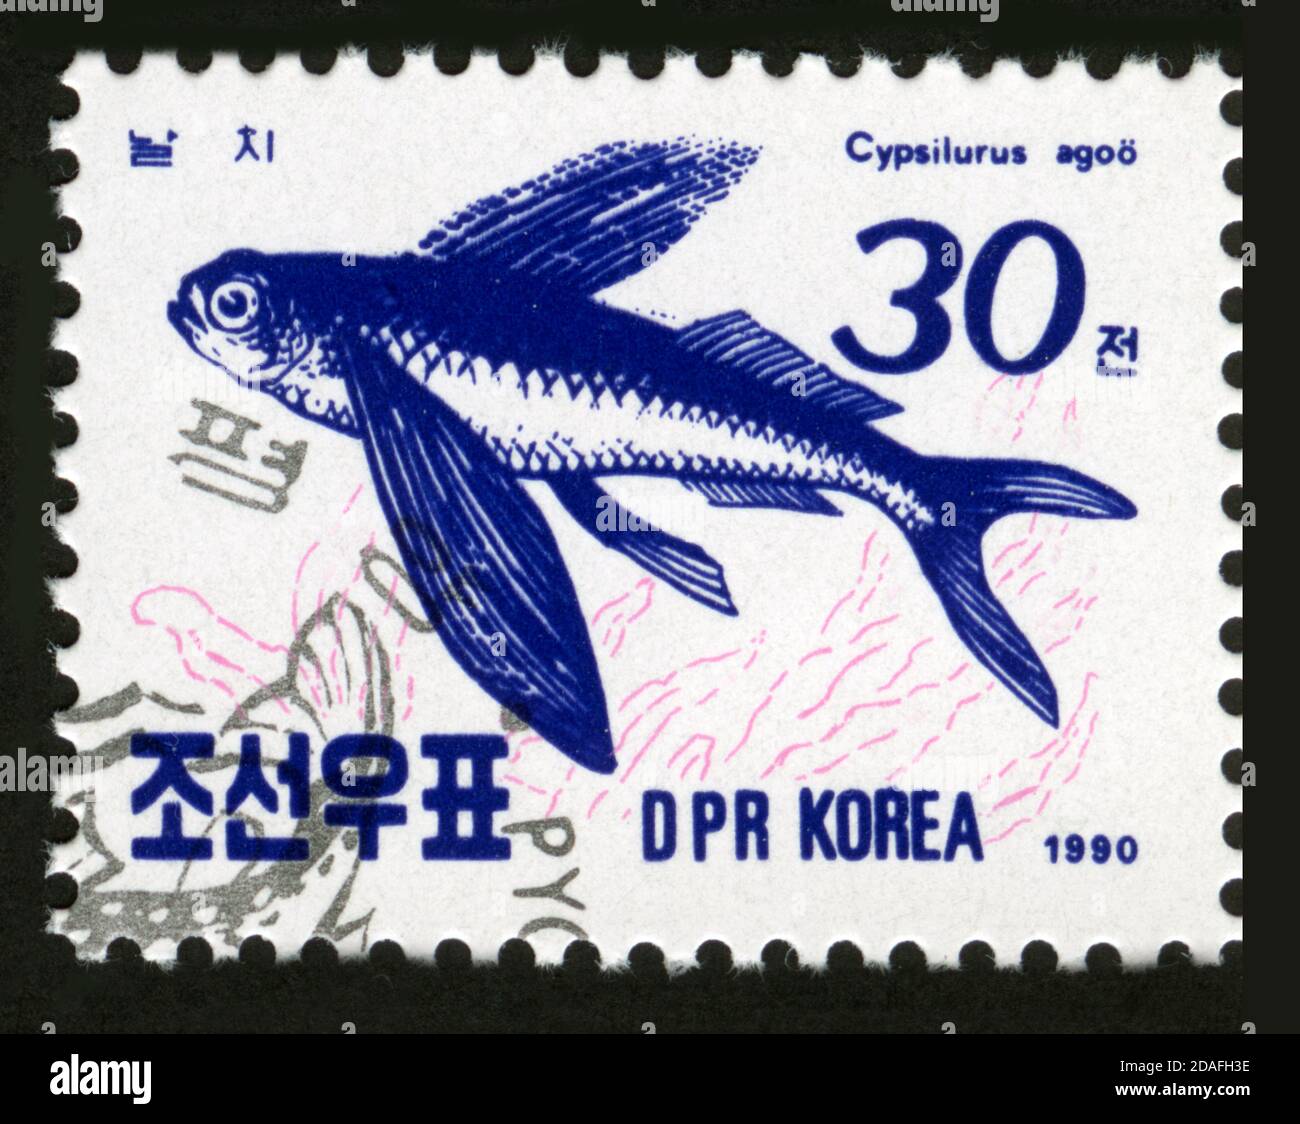 Stamp print in Korea,1990,animals,fish,Cypsilurus agoo Stock Photo